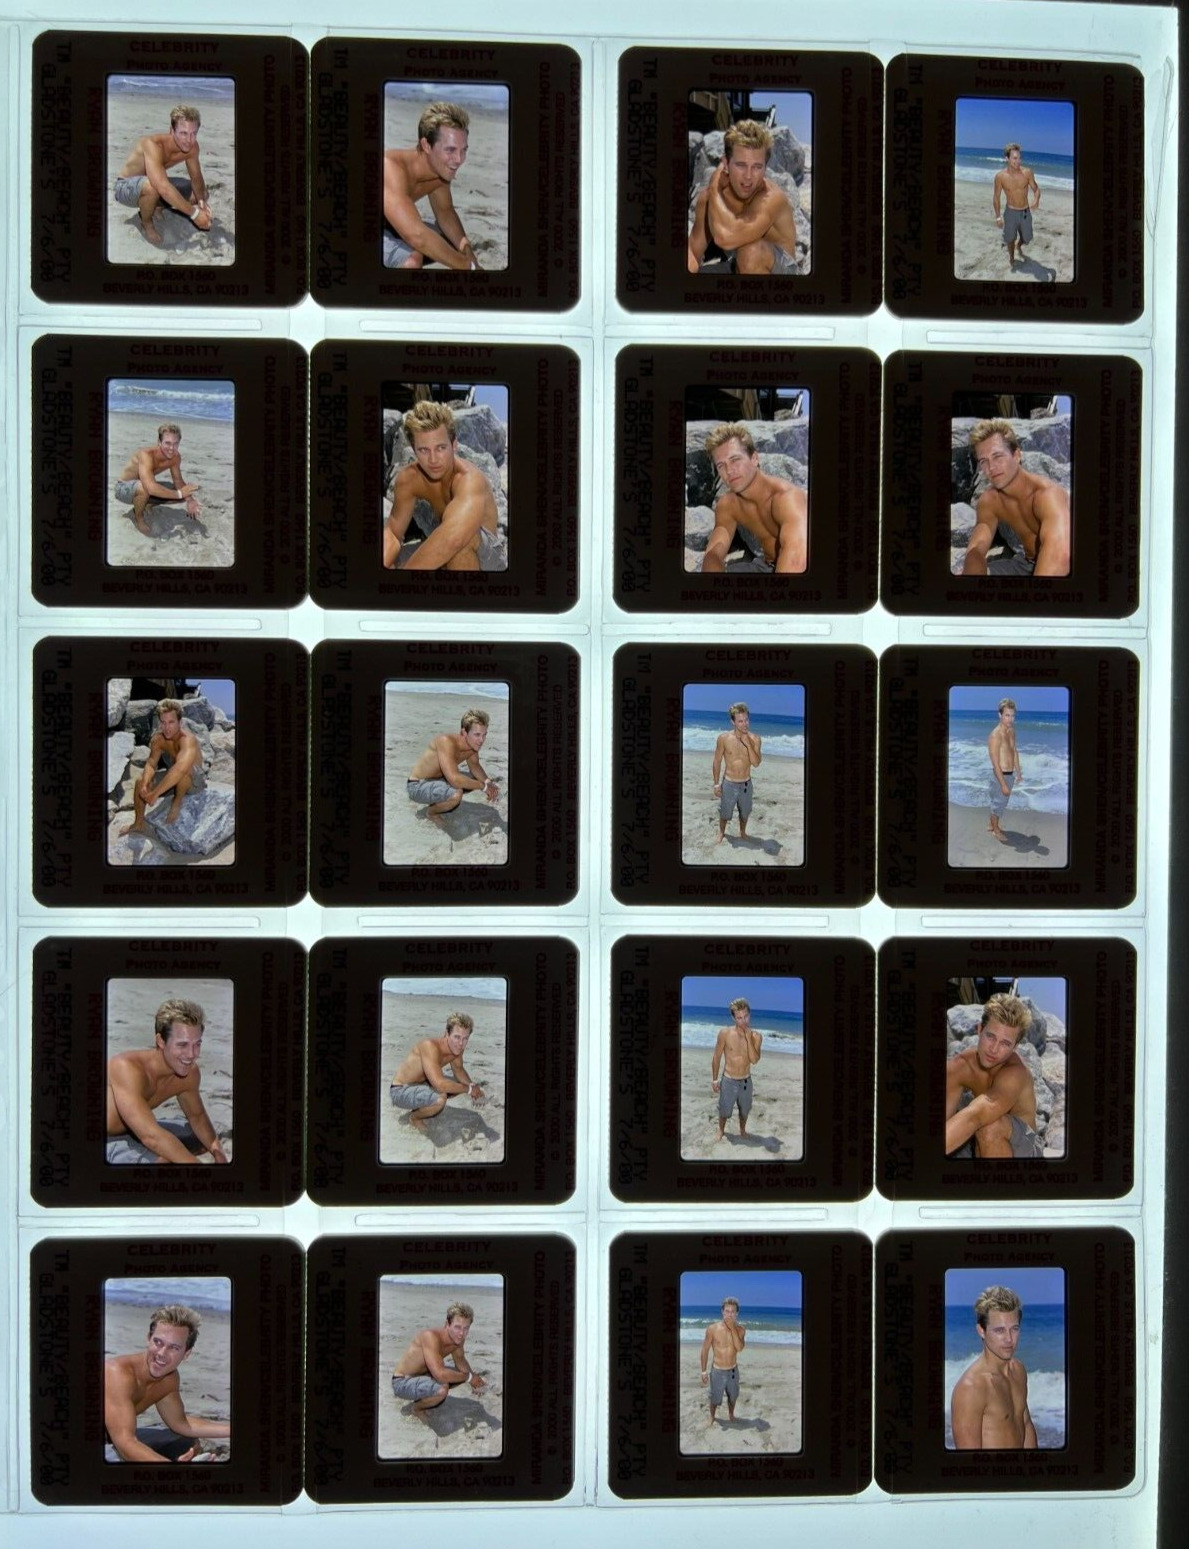 RYAN BROWNING Extreme Days Actor 35mm Slide Photo Lot of 20 slides RB1